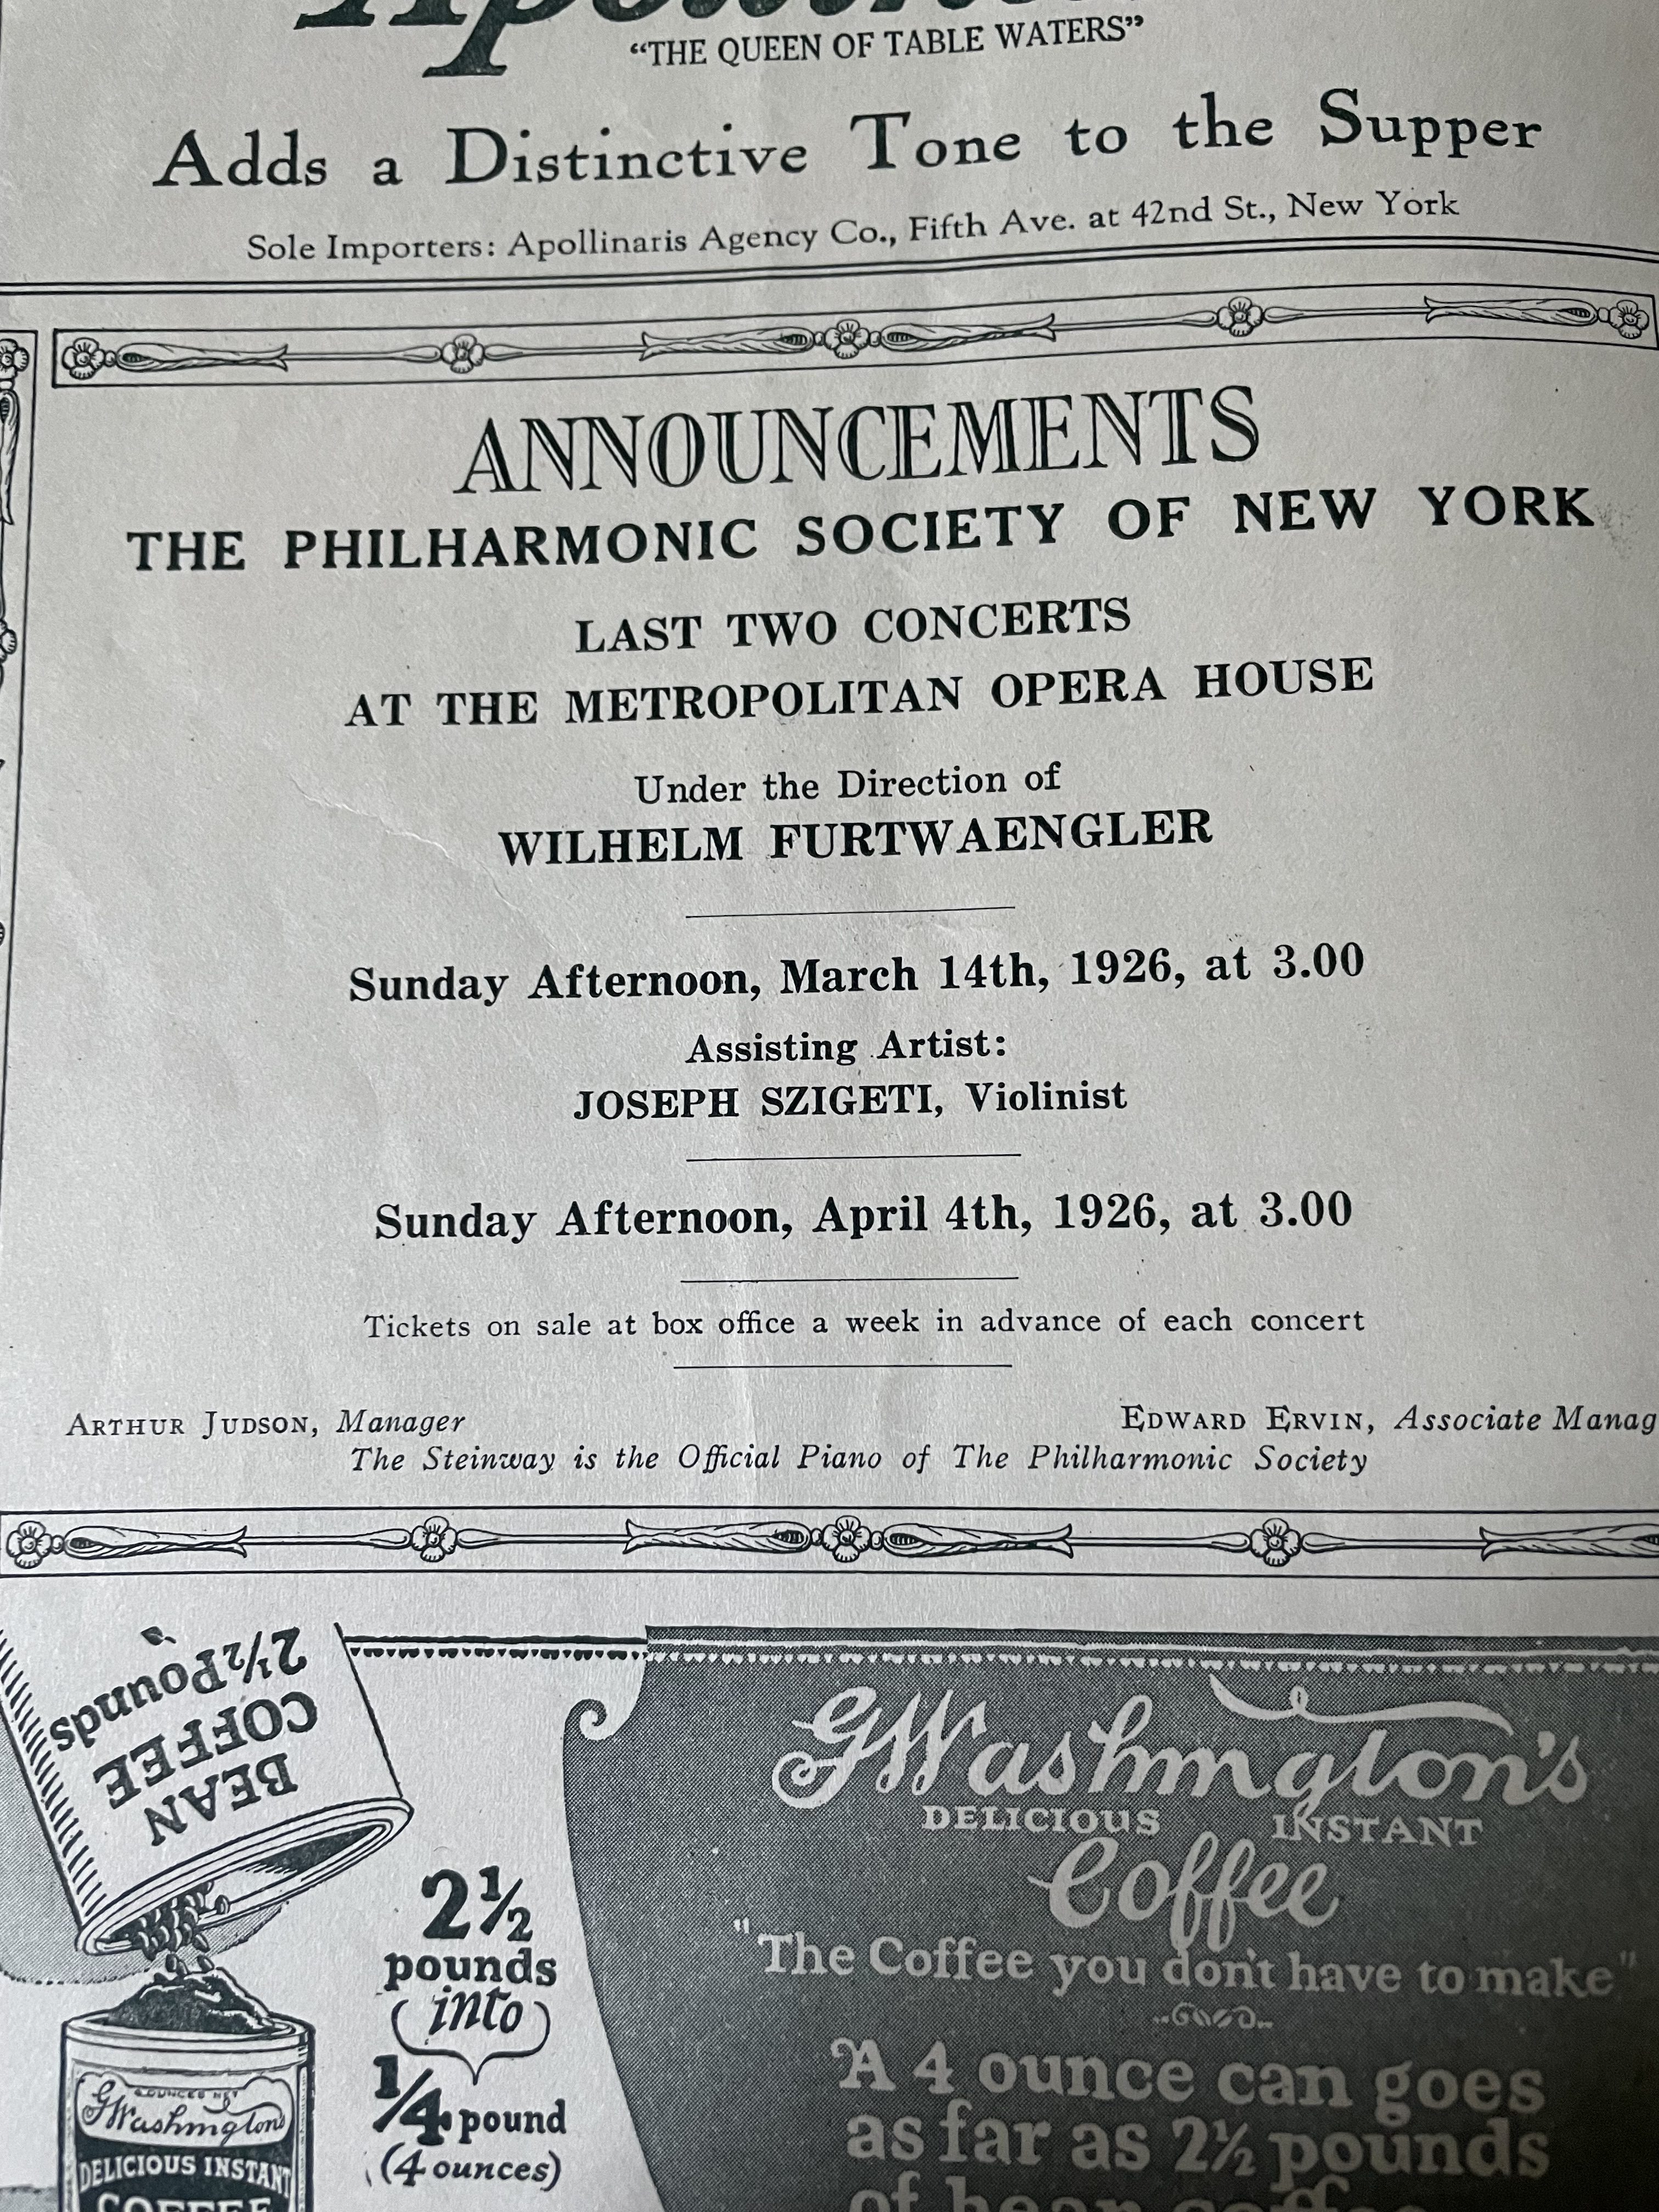 Did Furtwängler ever conduct at the Met?